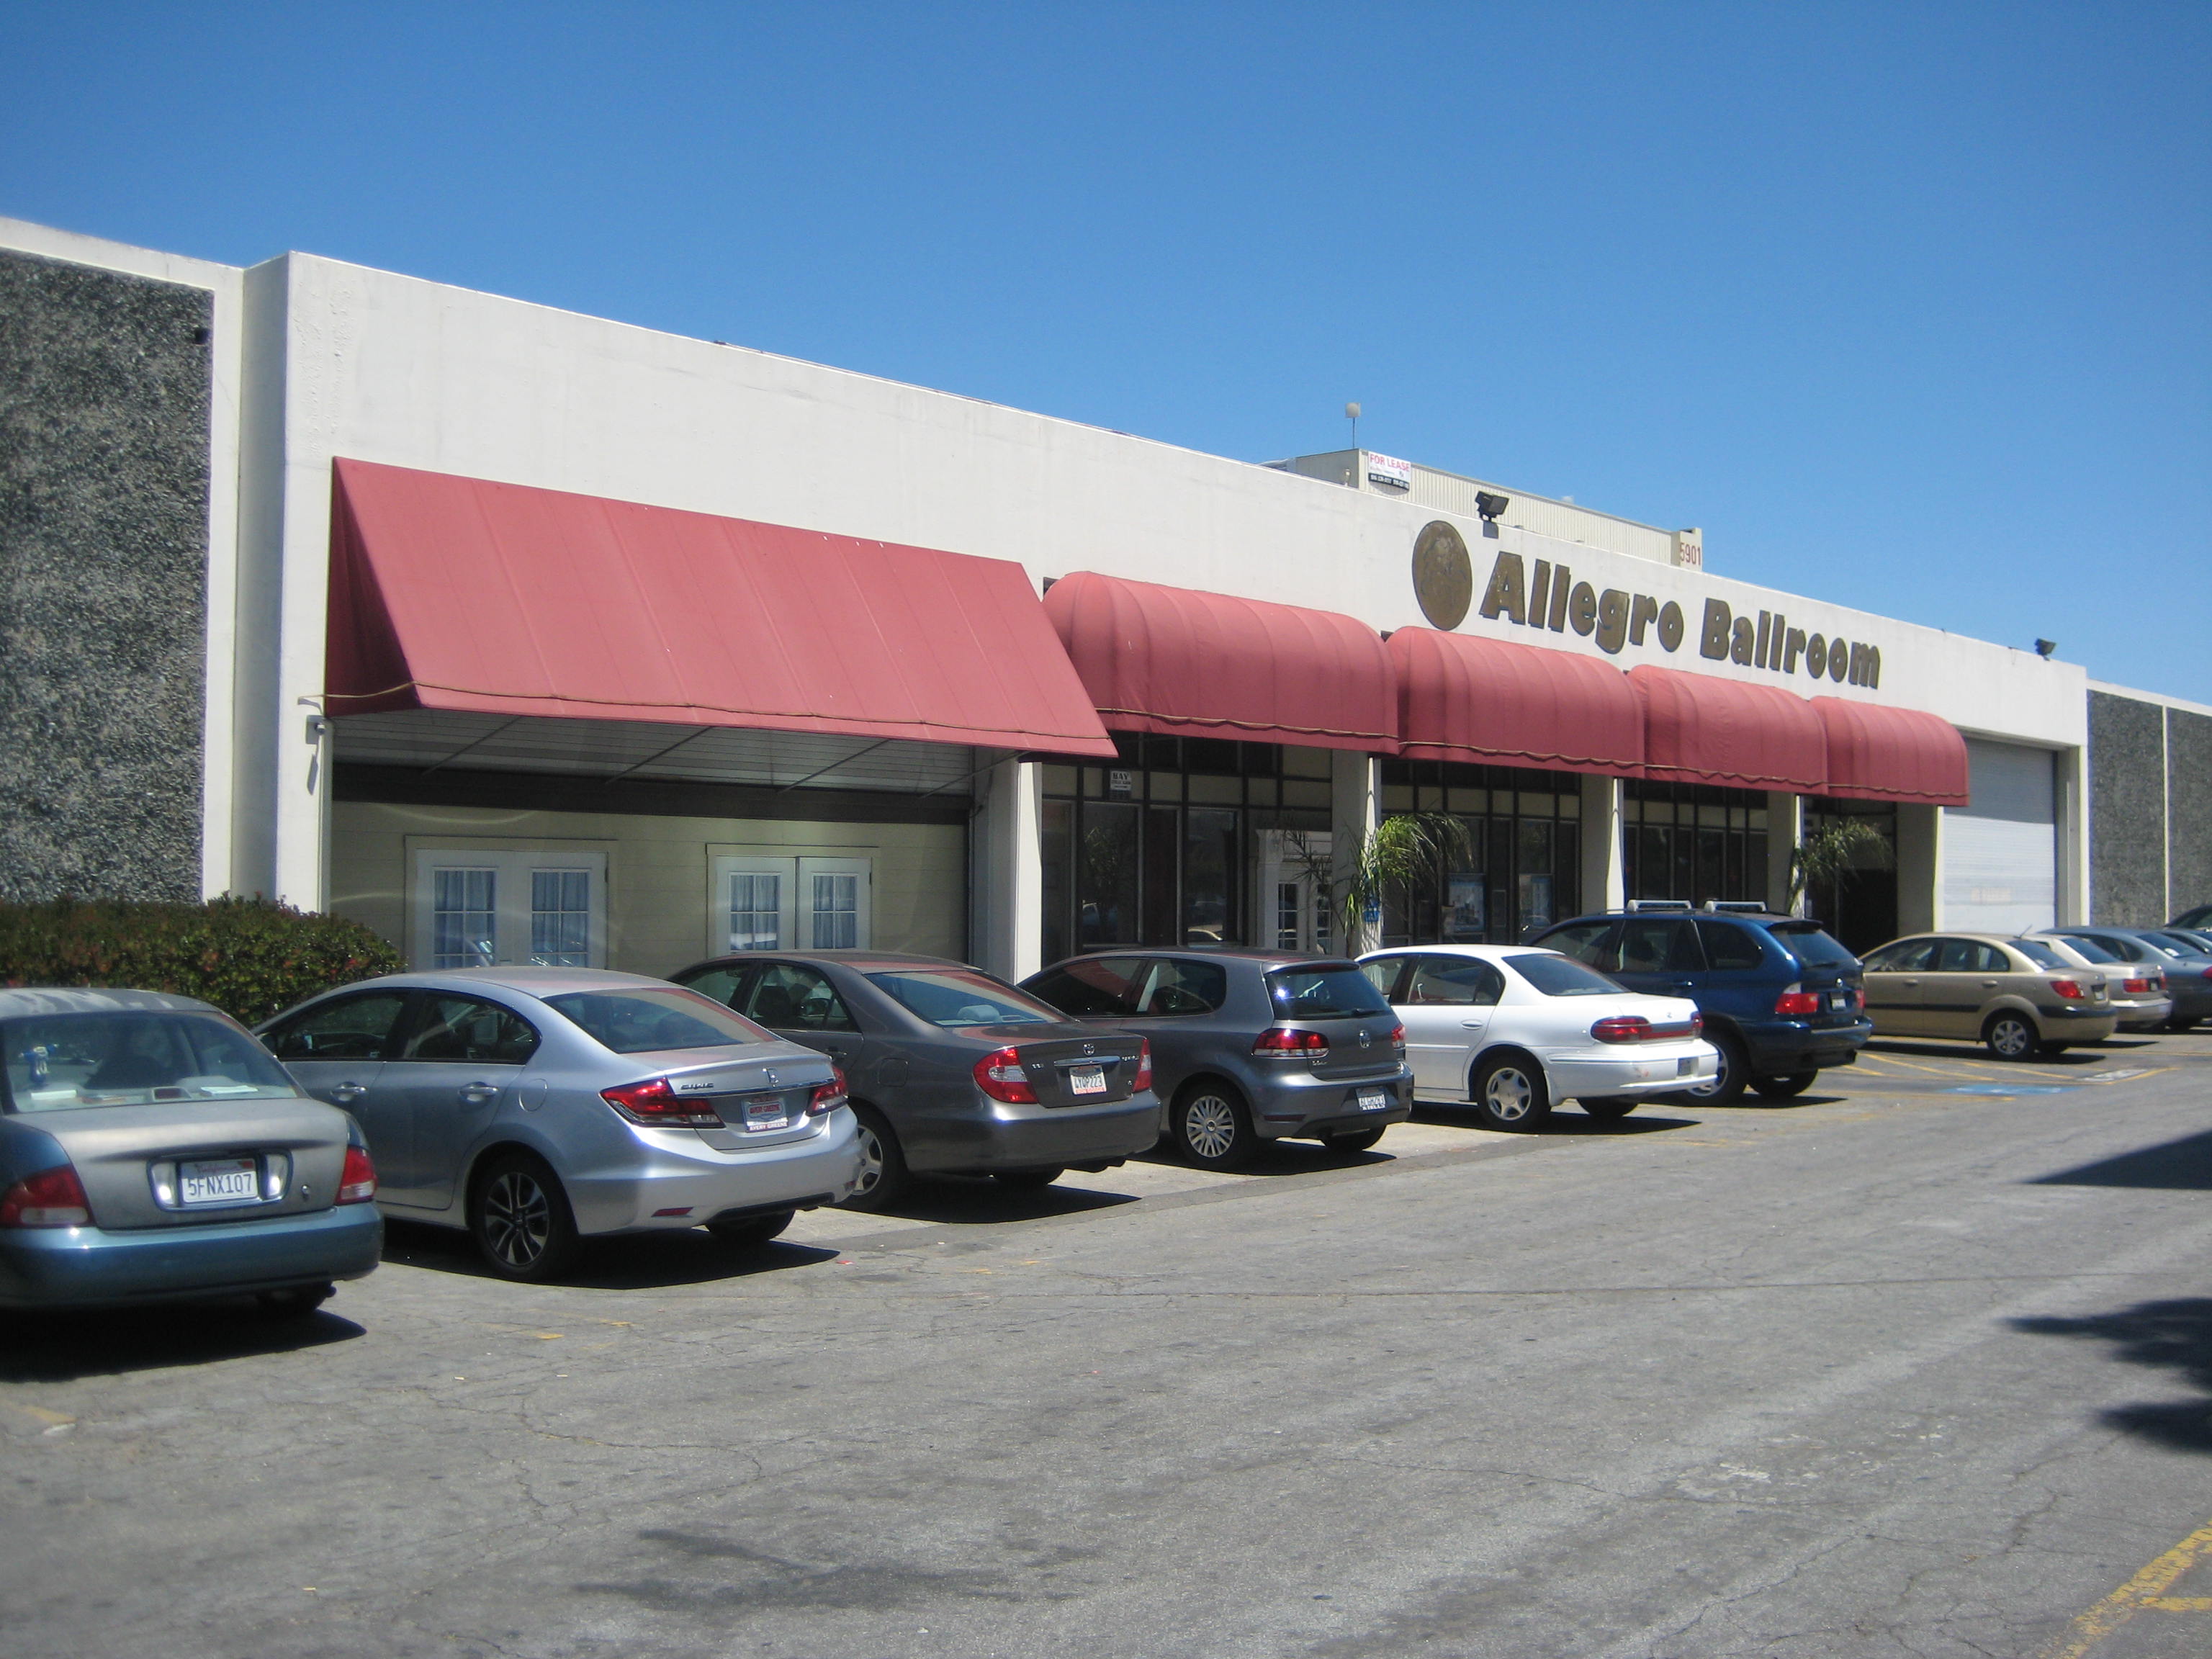 Allegro Ballroom Emeryville, California